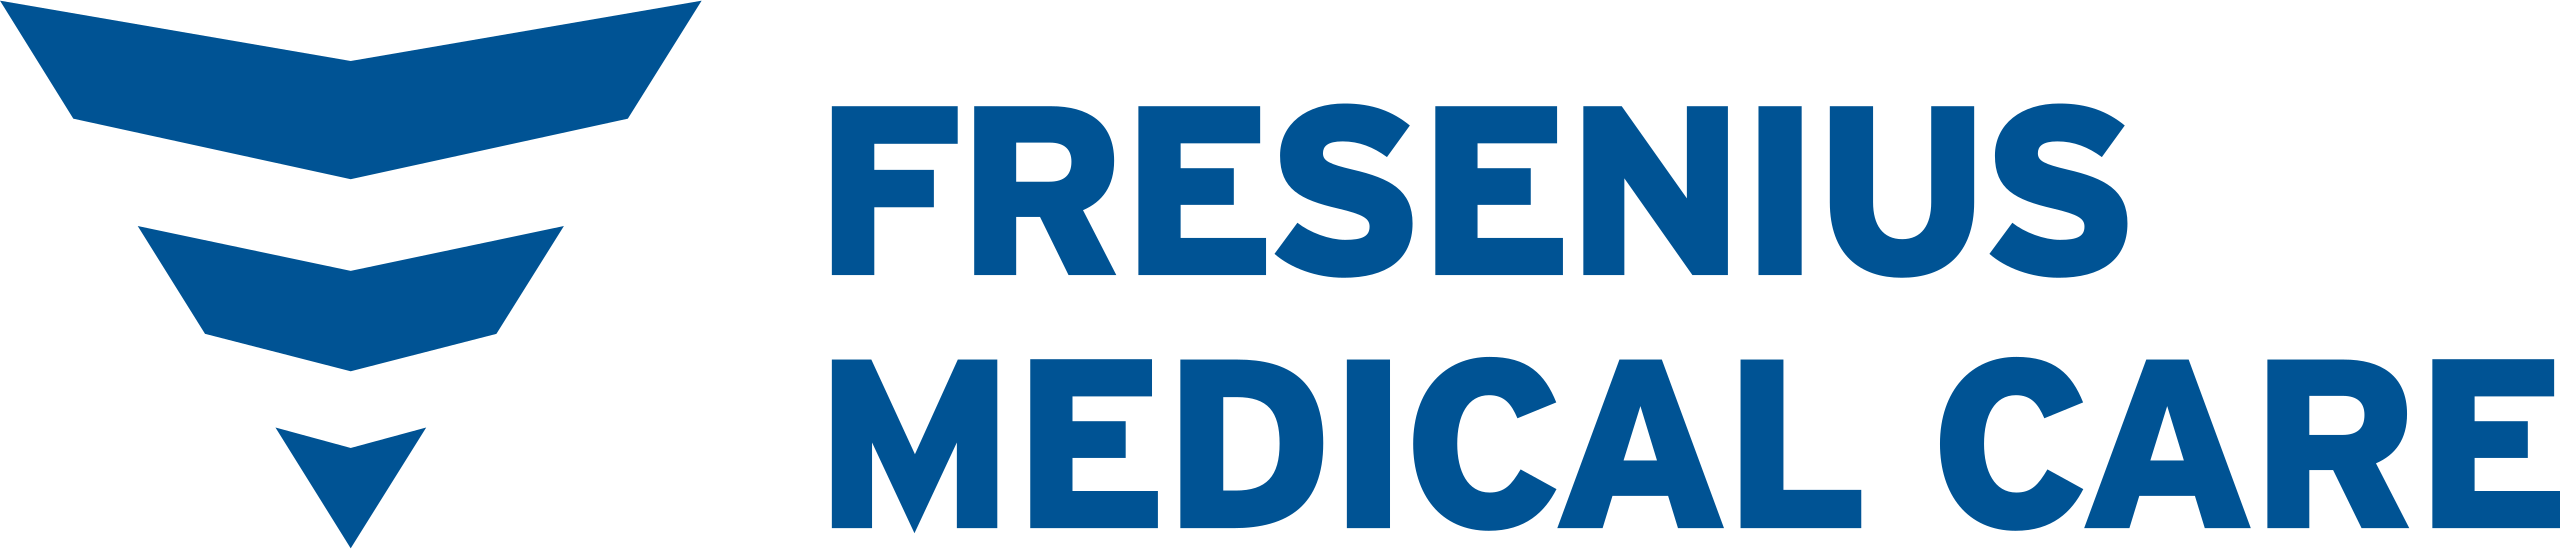 Fresenius Medical Logo